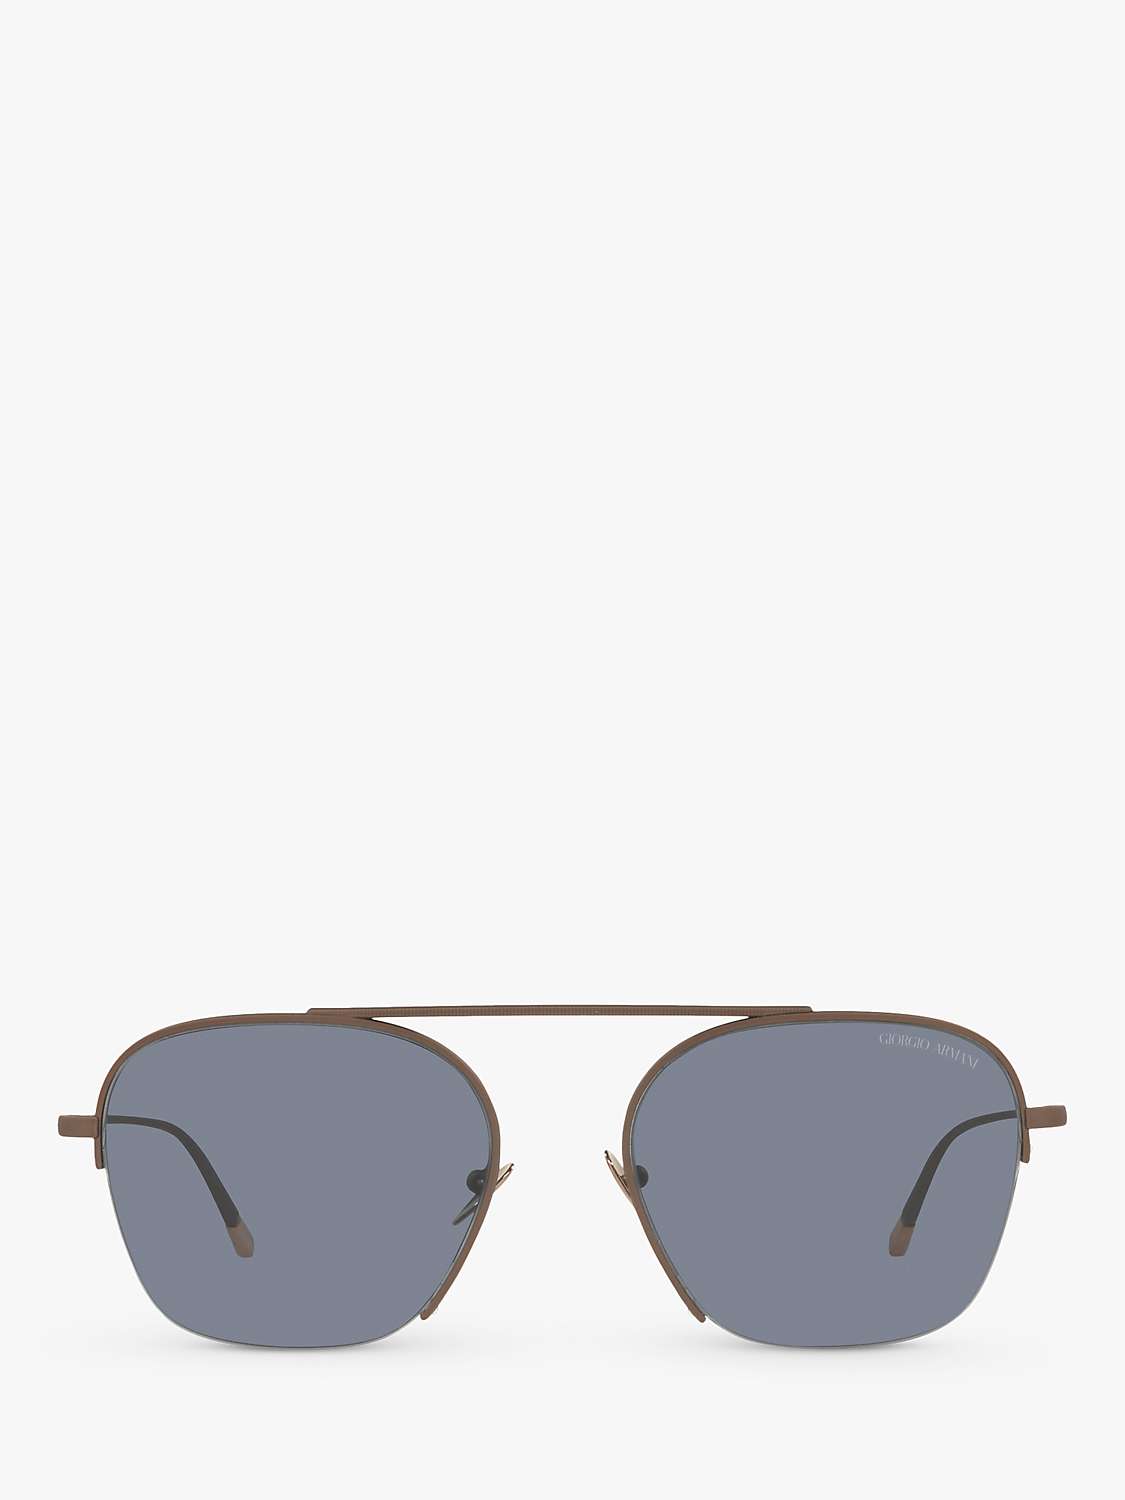 Buy Giorgio Armani AR6124 Men's Square Sunglasses, Bronze/Blue Online at johnlewis.com